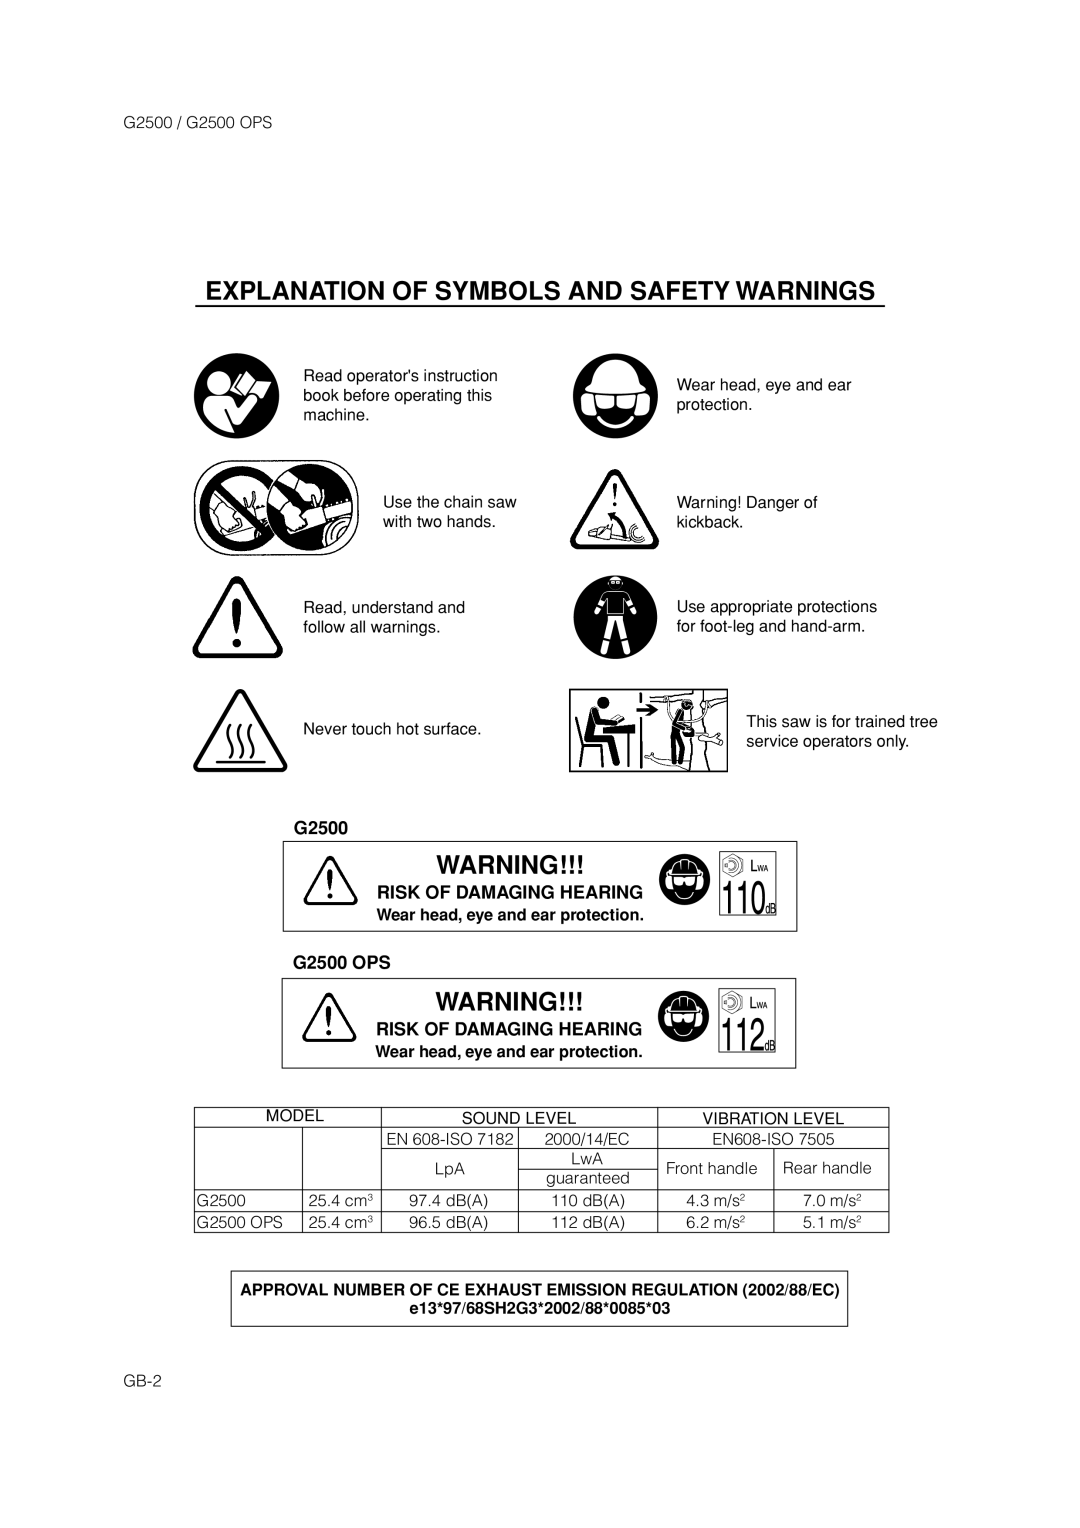 Zenoah G2500 OPS owner manual Wear head, eye and ear protection, e13*97/68SH2G3*2002/88*0085*03, Risk Of Damaging Hearing 